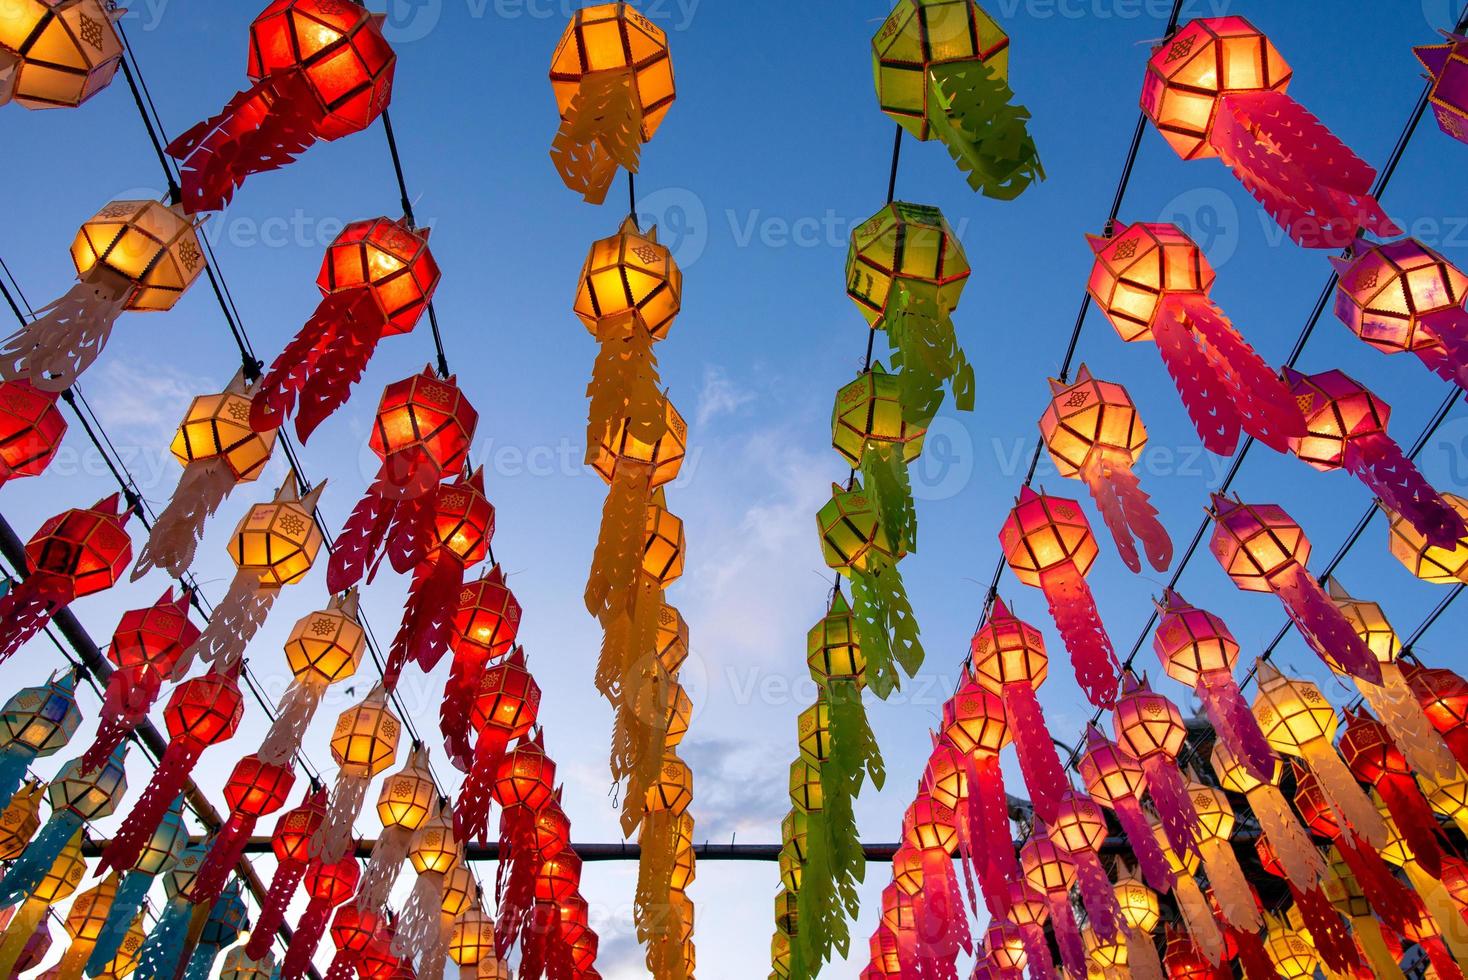 lindas lanternas coloridas no festival de lanternas yee peng em wat phra que hariphunchai em lamphun, Tailândia. foto